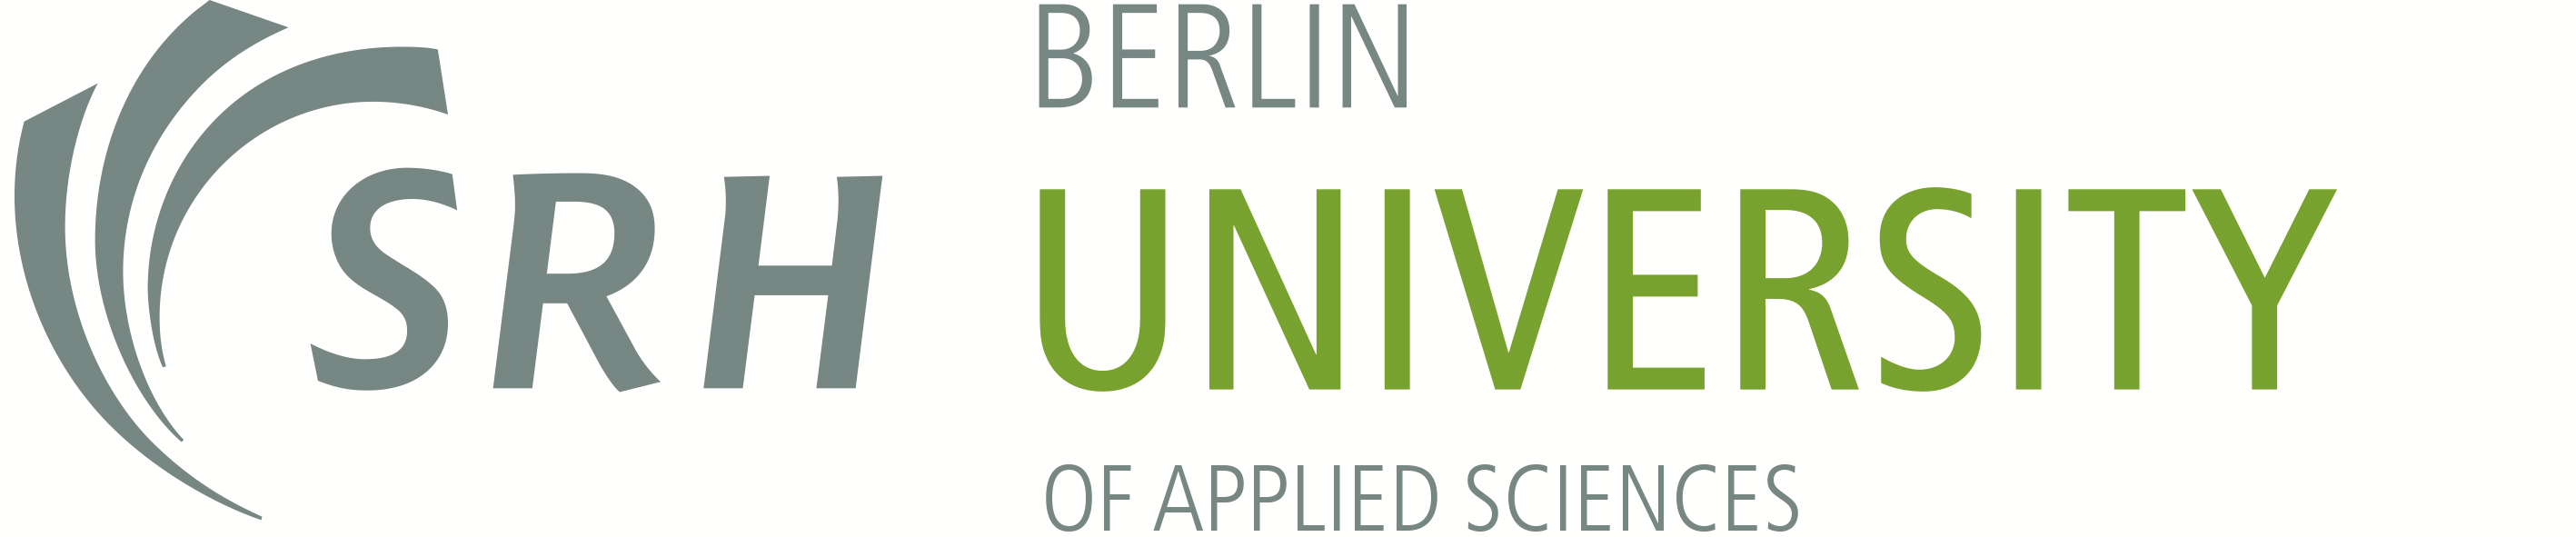 Logo SRH Berlin university